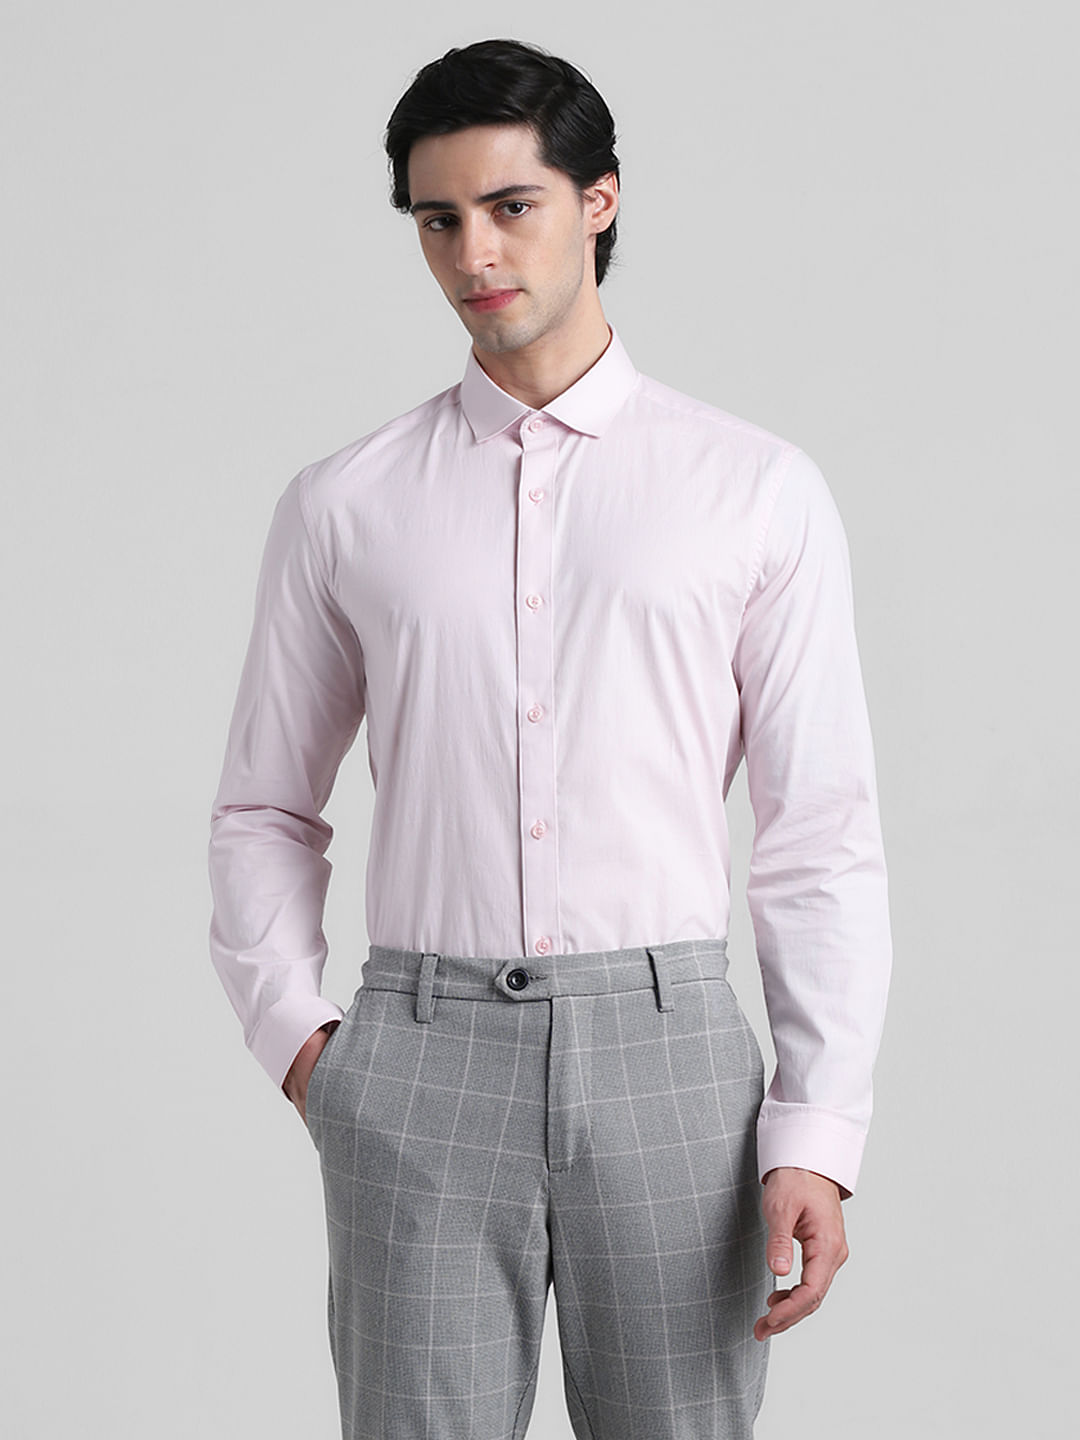 Top 10 Grey Pant Matching Shirt Ideas for Men||Grey Pant colour combinations  shirts||#greypant - YouTube